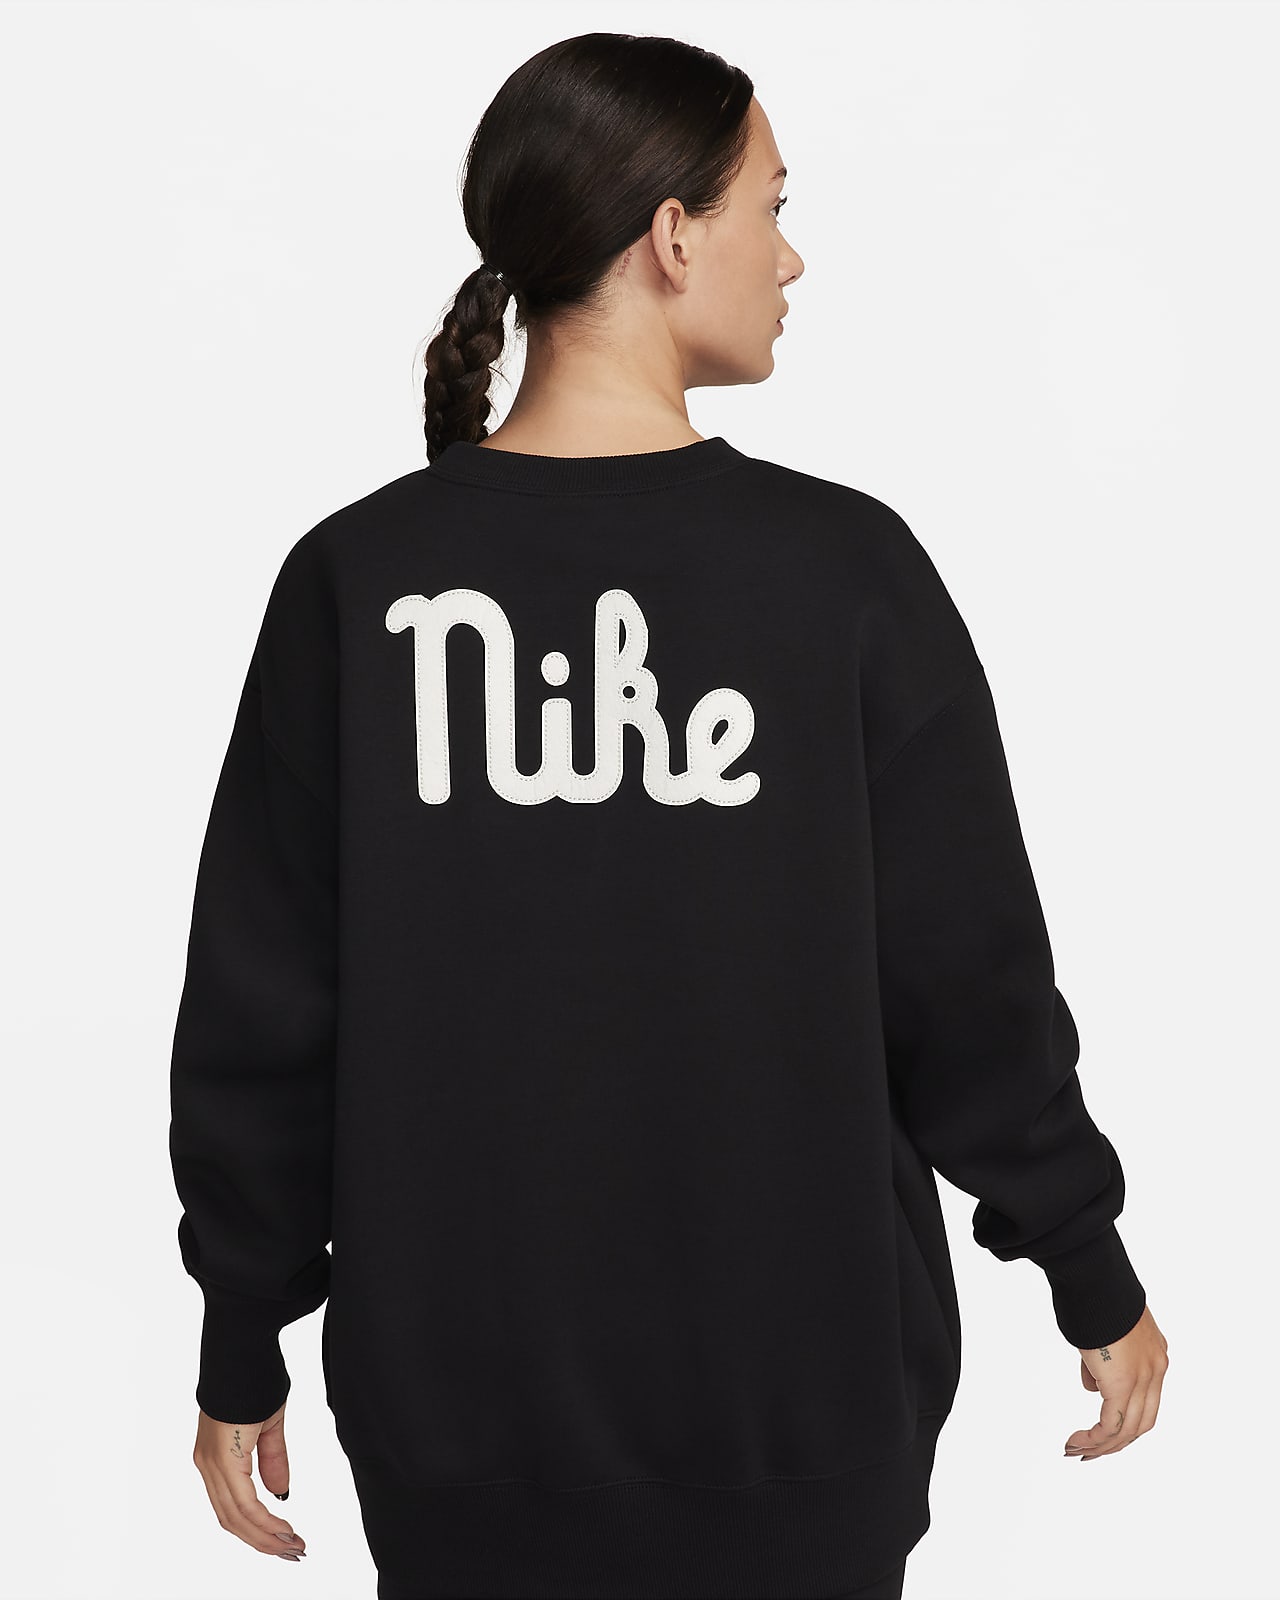 Womens Nike Phoenix Oversized Sweatshirt - XS - Brand New With